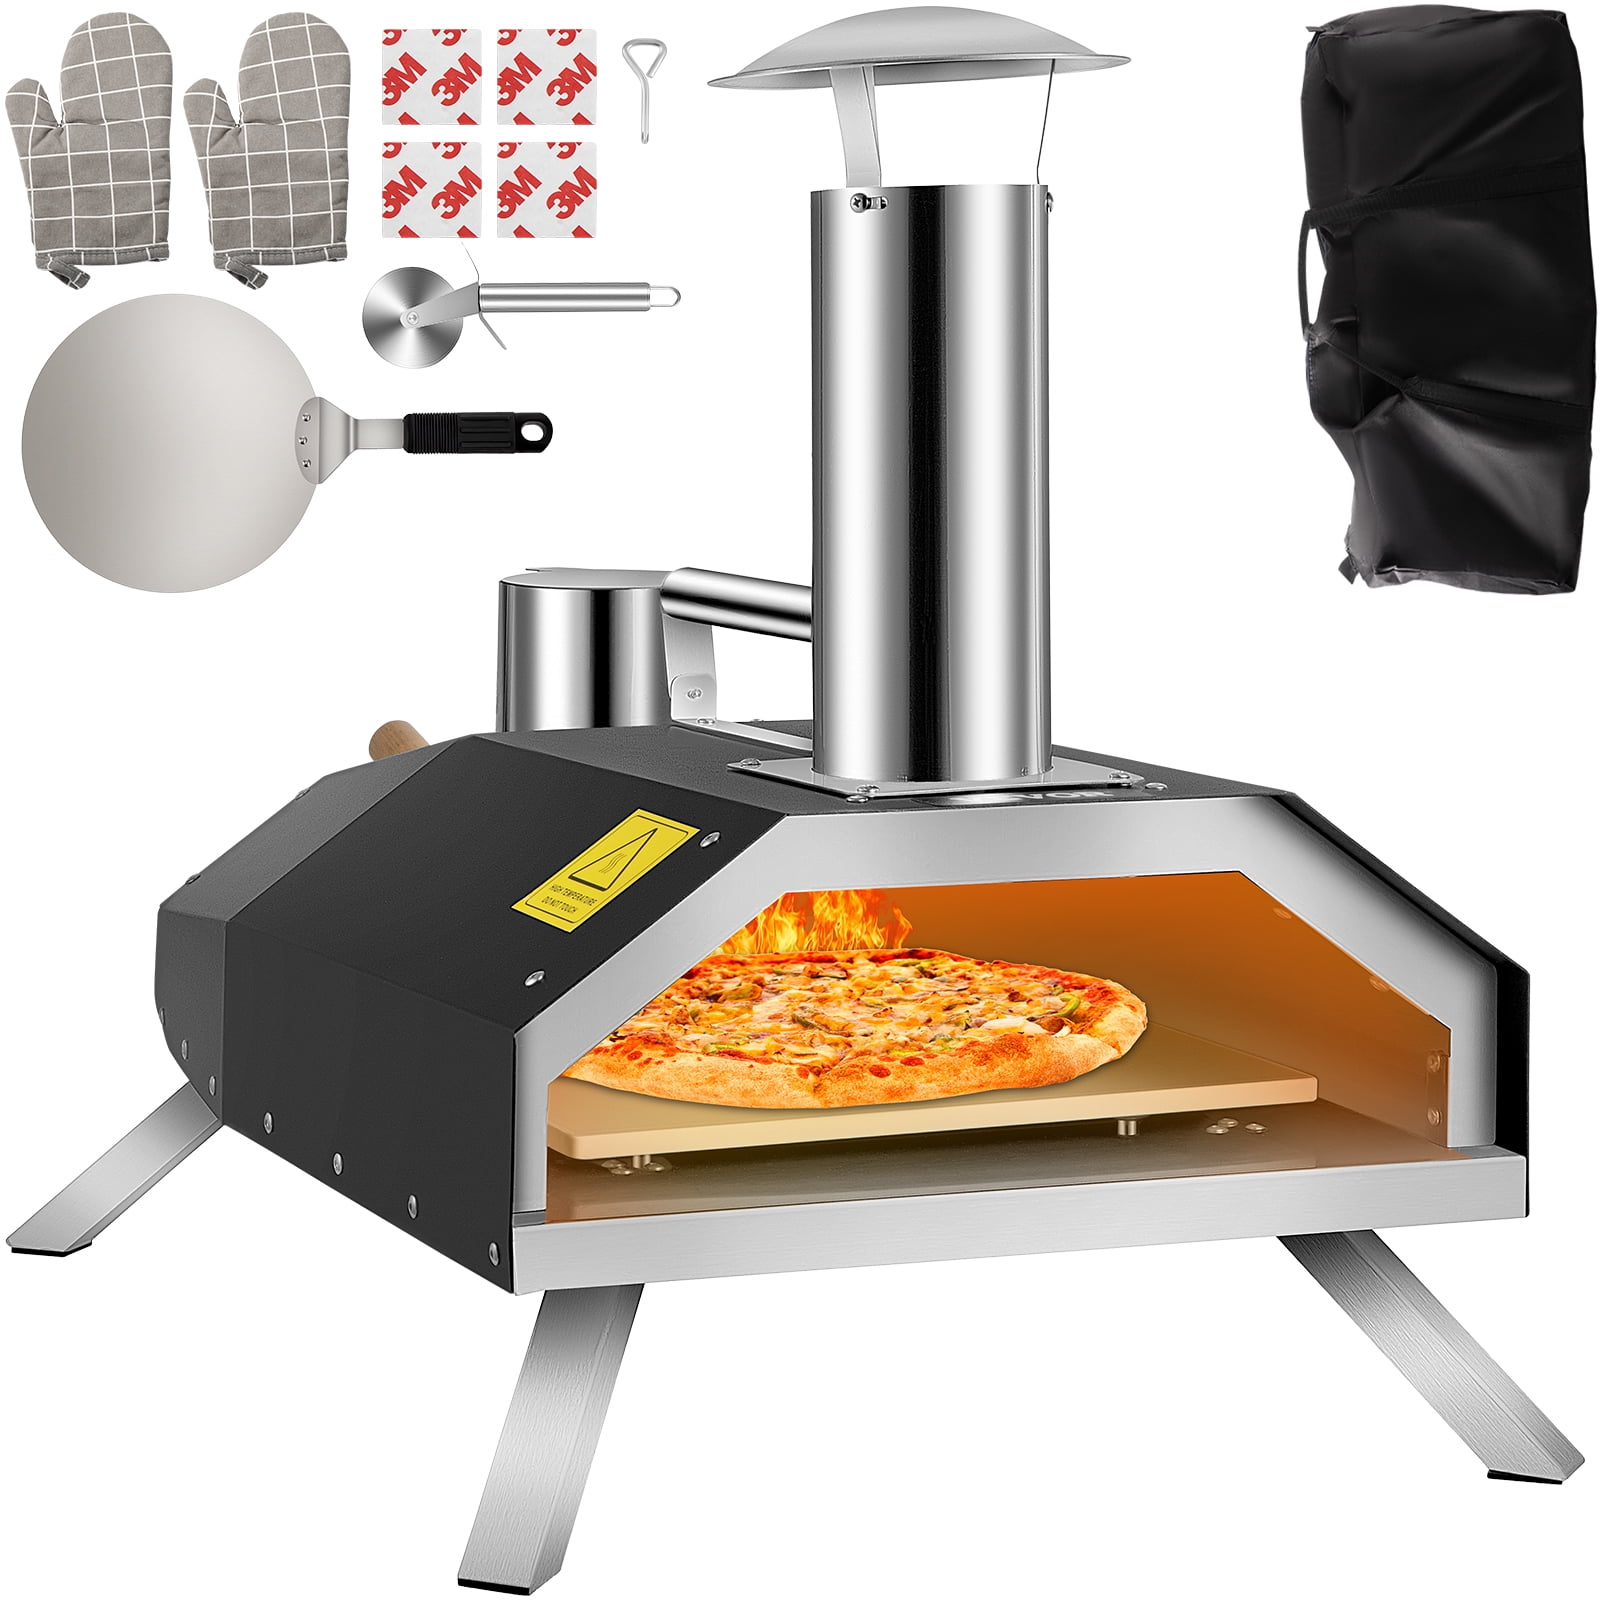 VEVORbrand Portable Pizza Oven, 12 Pellet Pizza Oven, Stainless